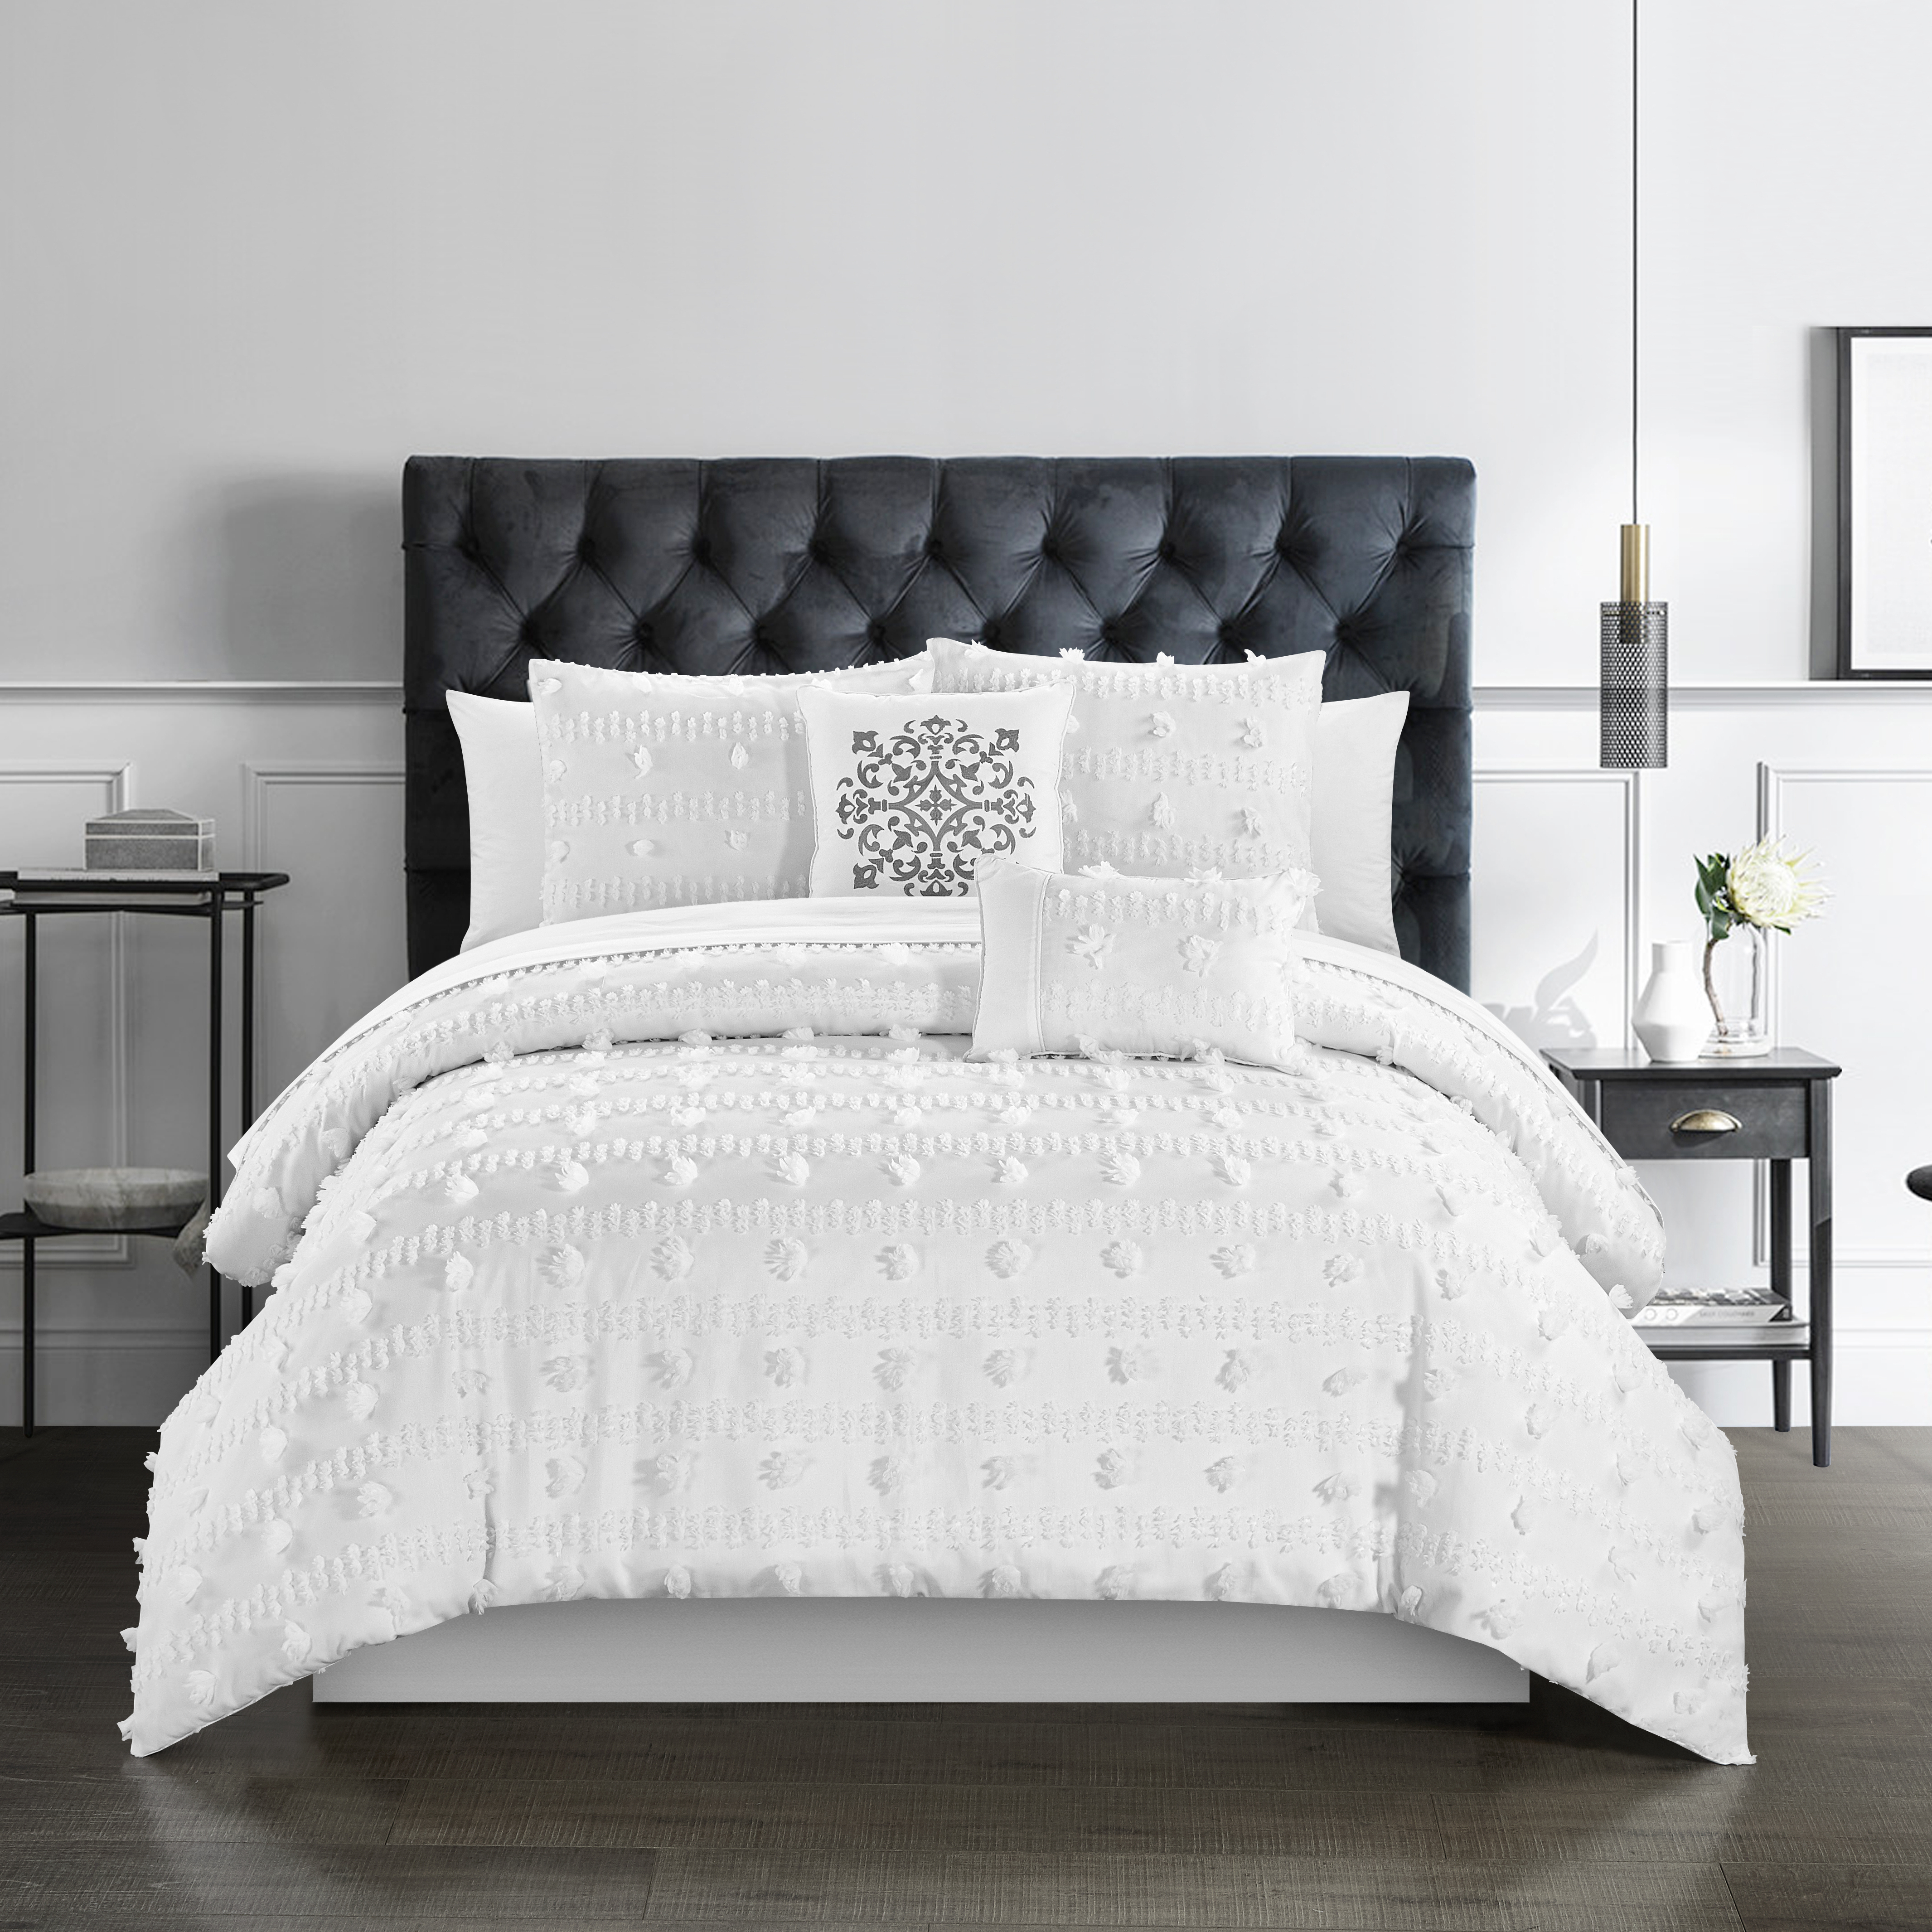 Ahtisa 5 Piece Comforter Set Jacquard Floral Applique Design Bedding - White, King